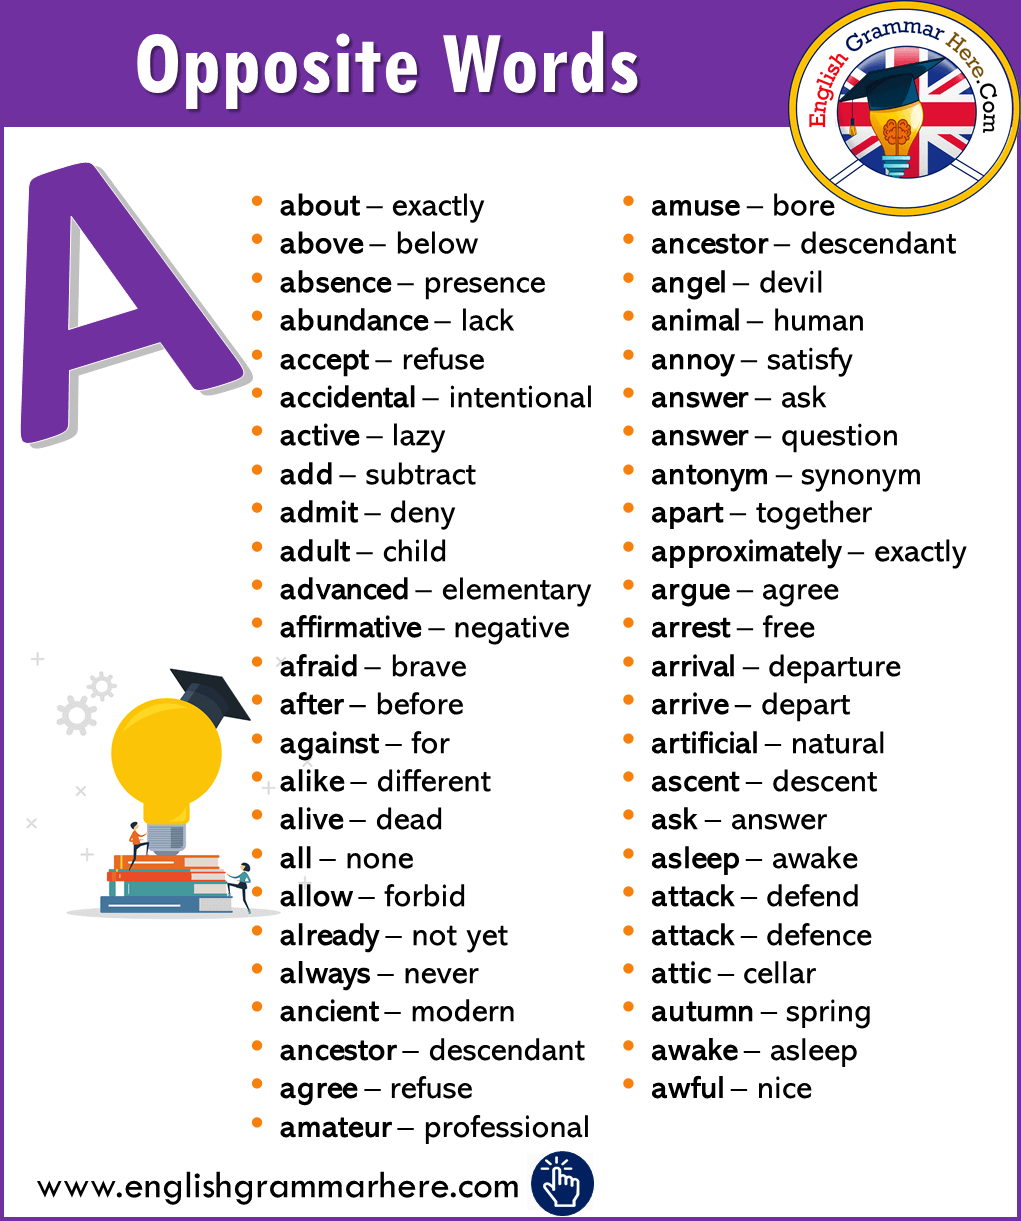 Alphabetical Opposite Word List - A